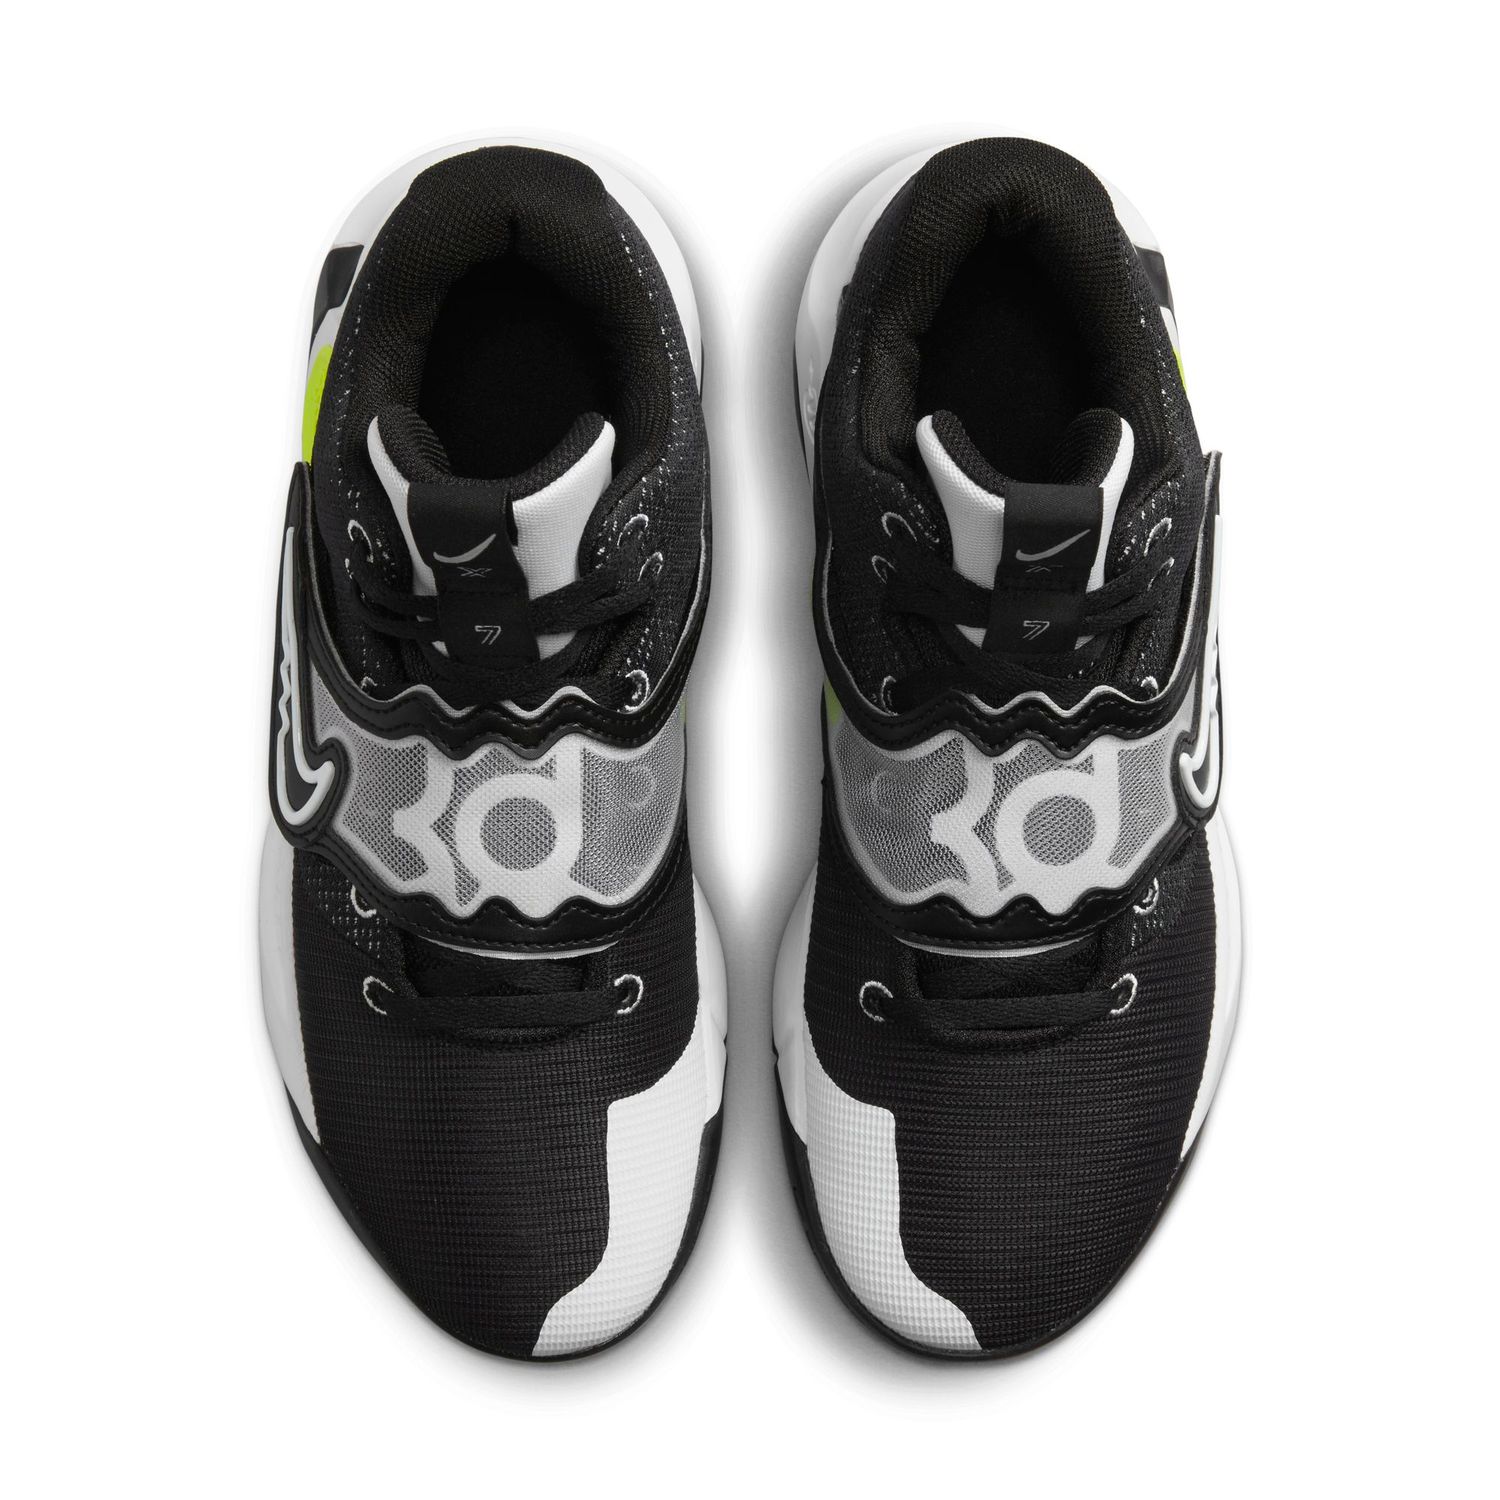 Nike KD Trey 5 X Herren Basketballschuh